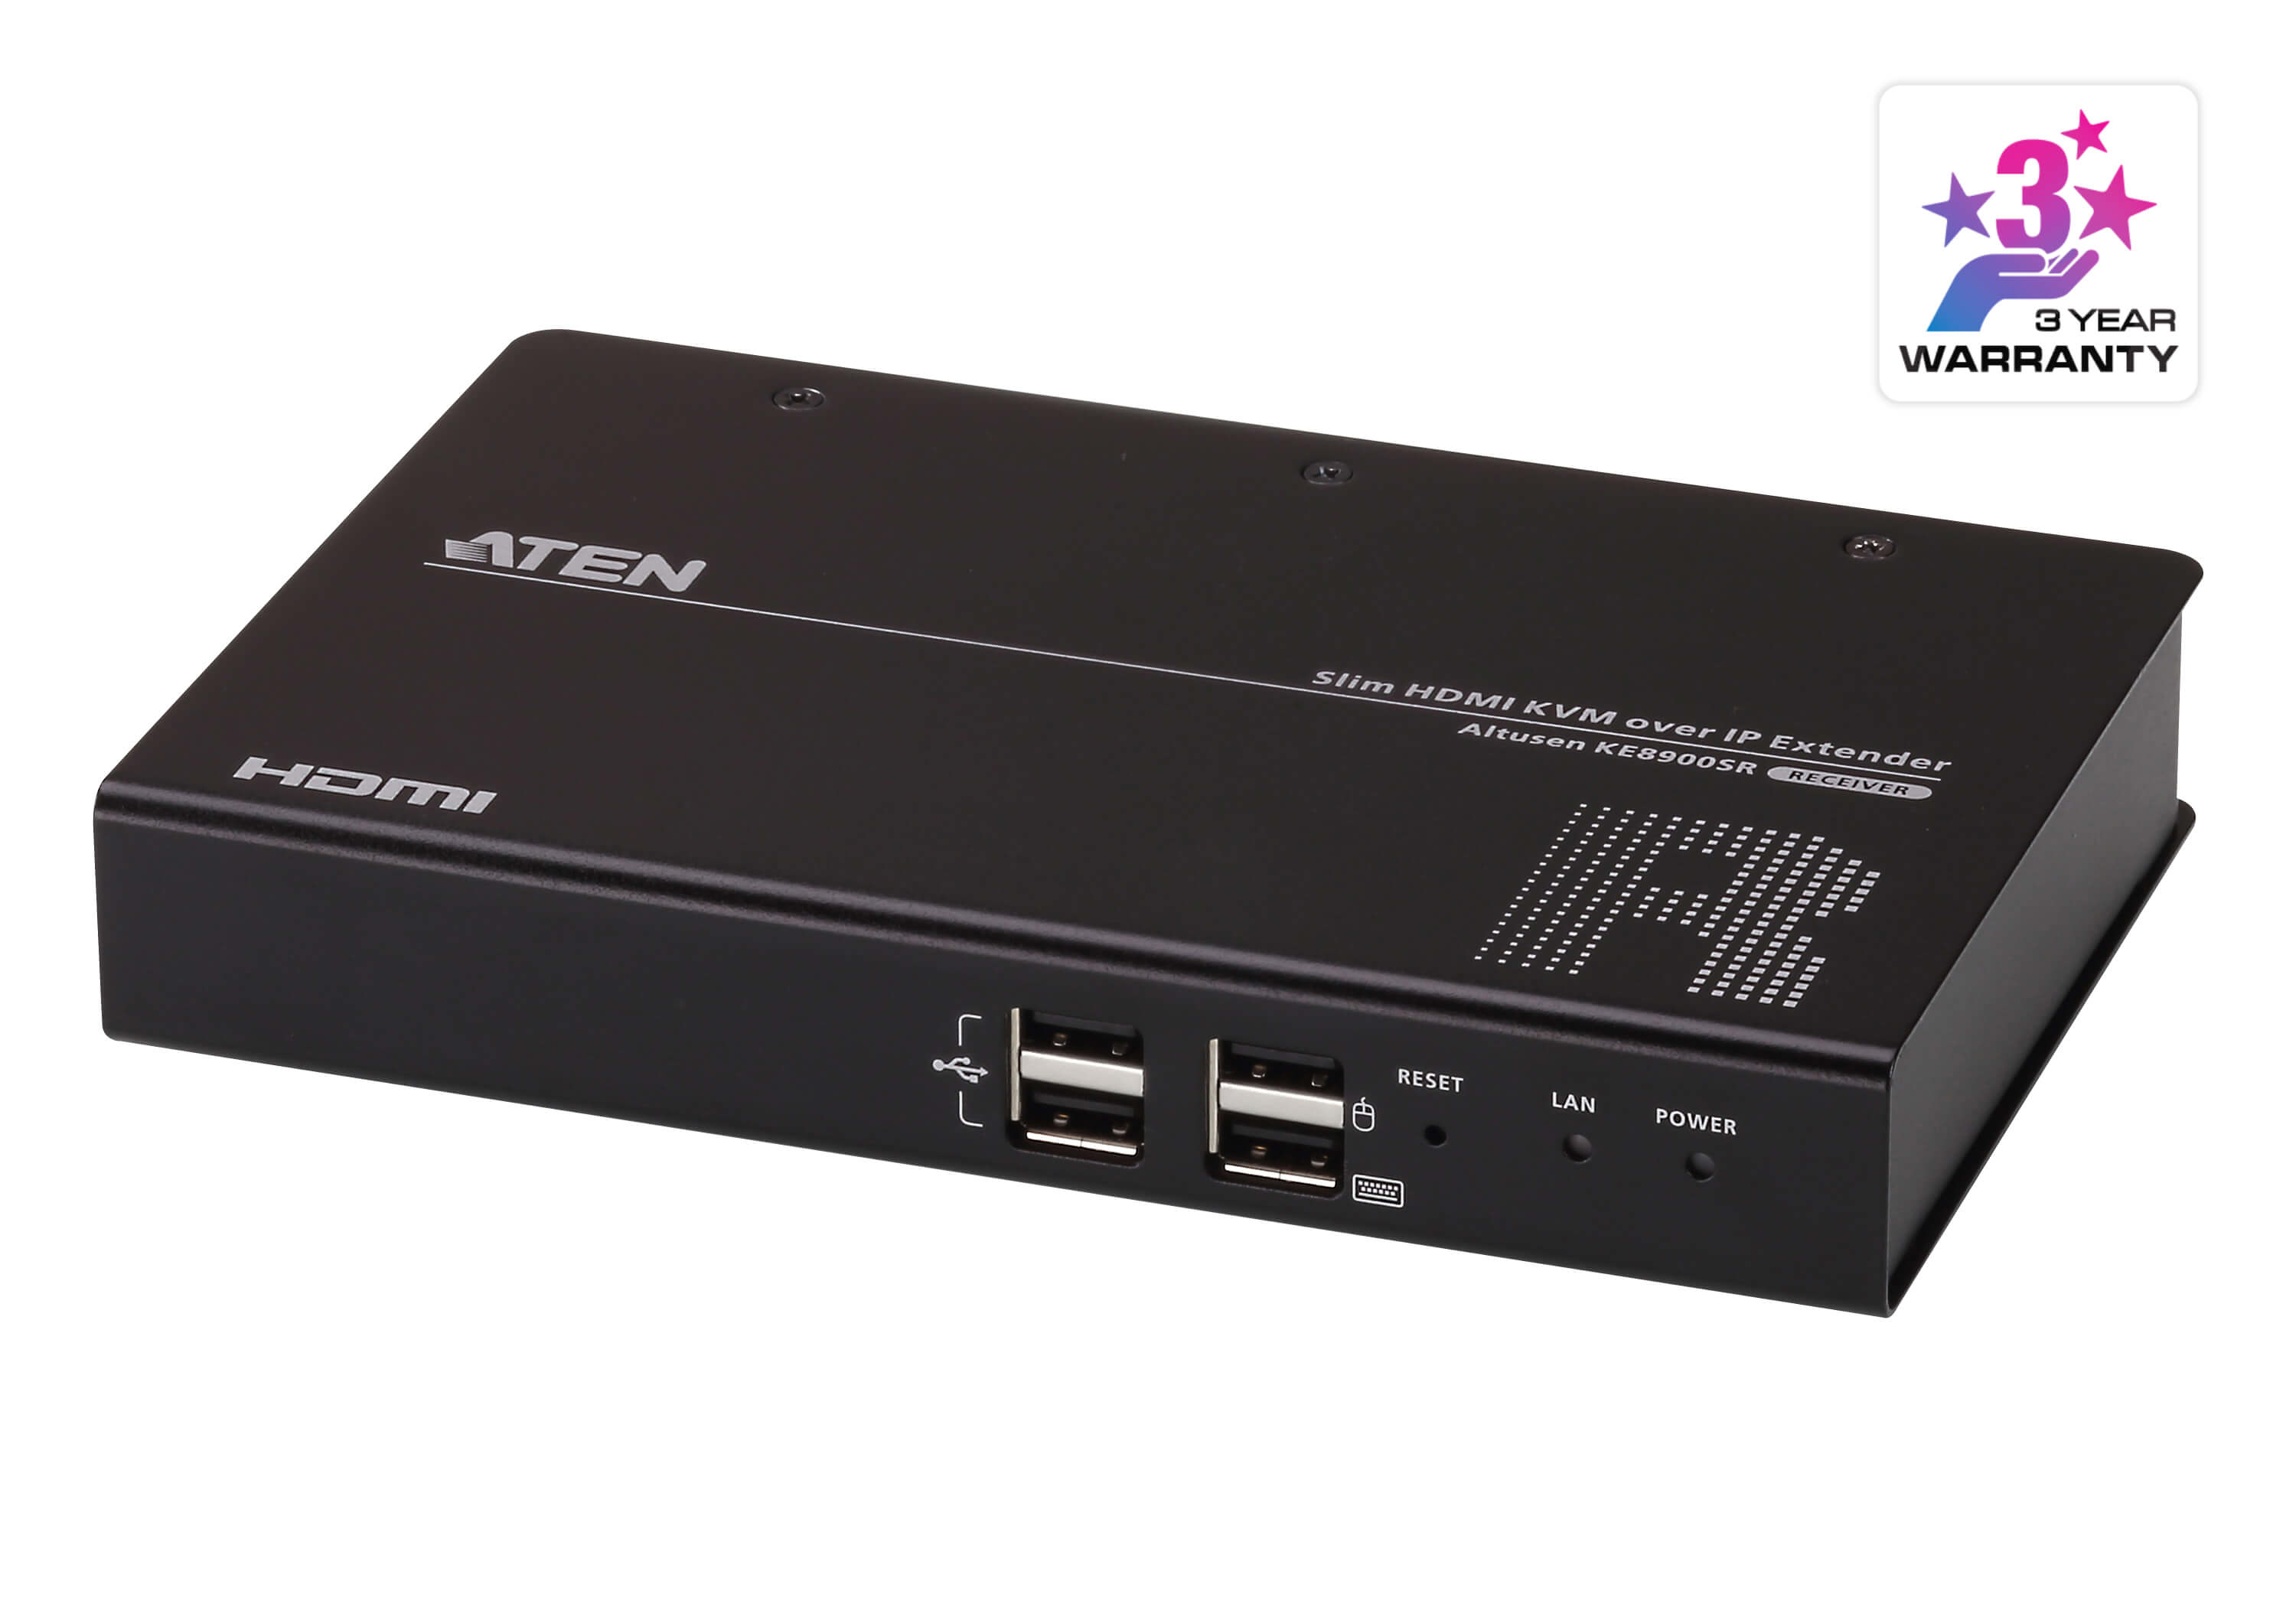 ATEN ALTUSEN KE8900SR Slim HDMI Single Display KVM over IP Receiver